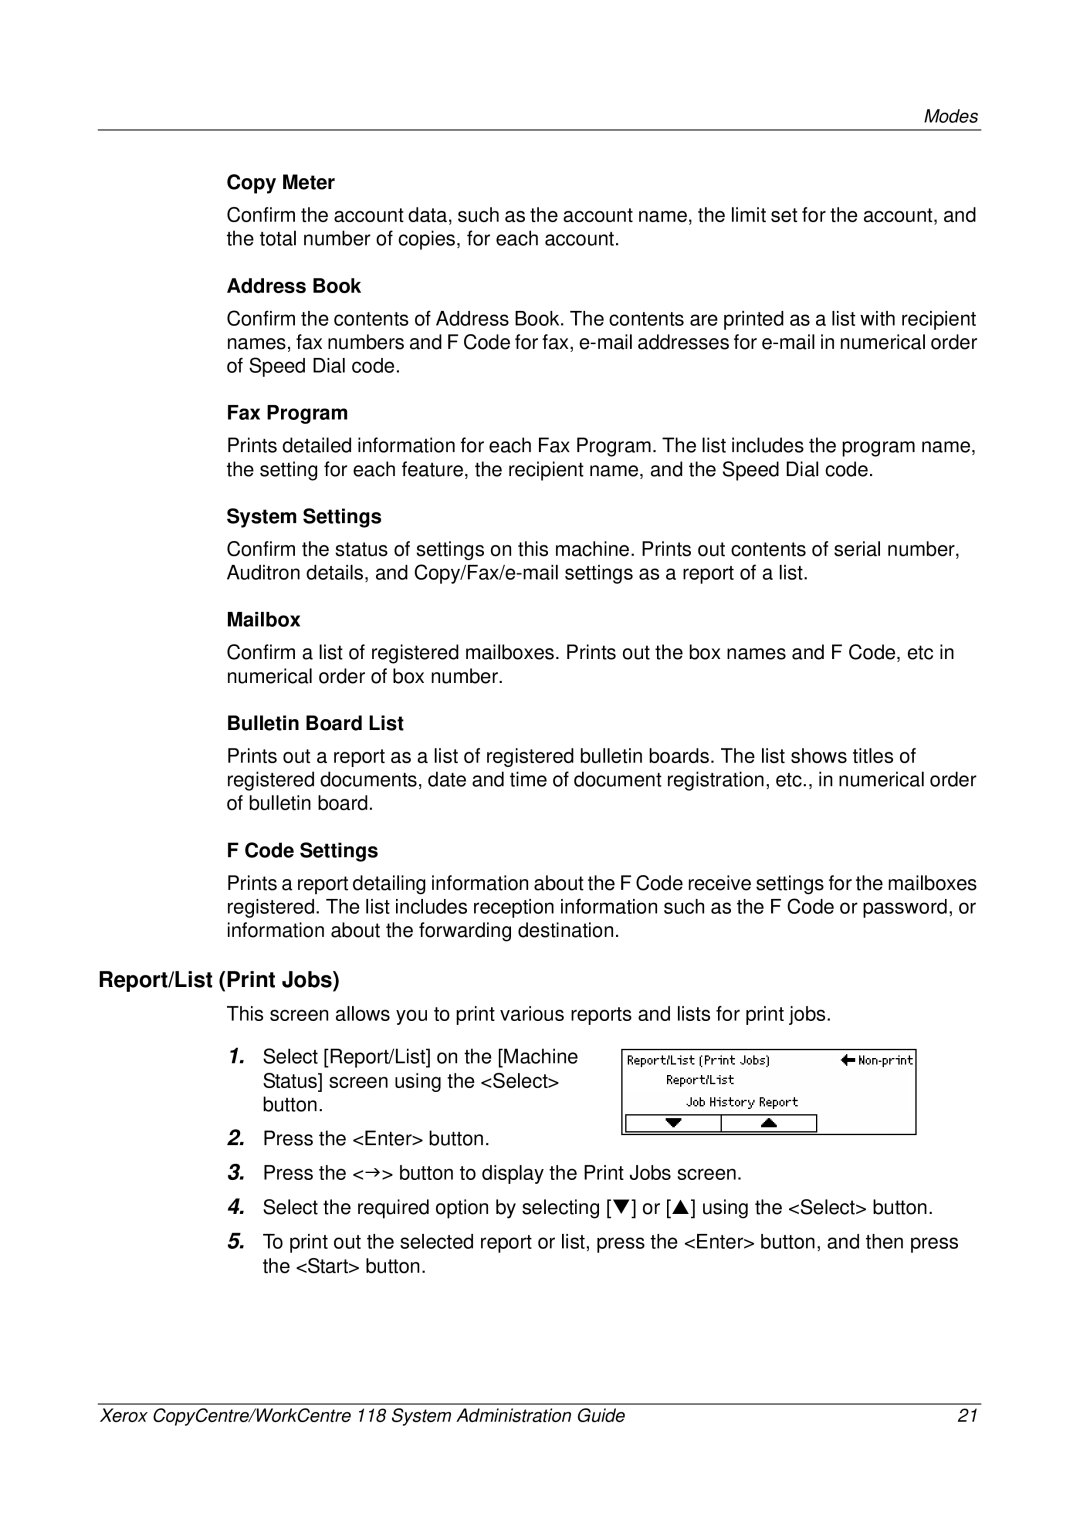 Xerox 701P42722_EN manual Report/List Print Jobs 